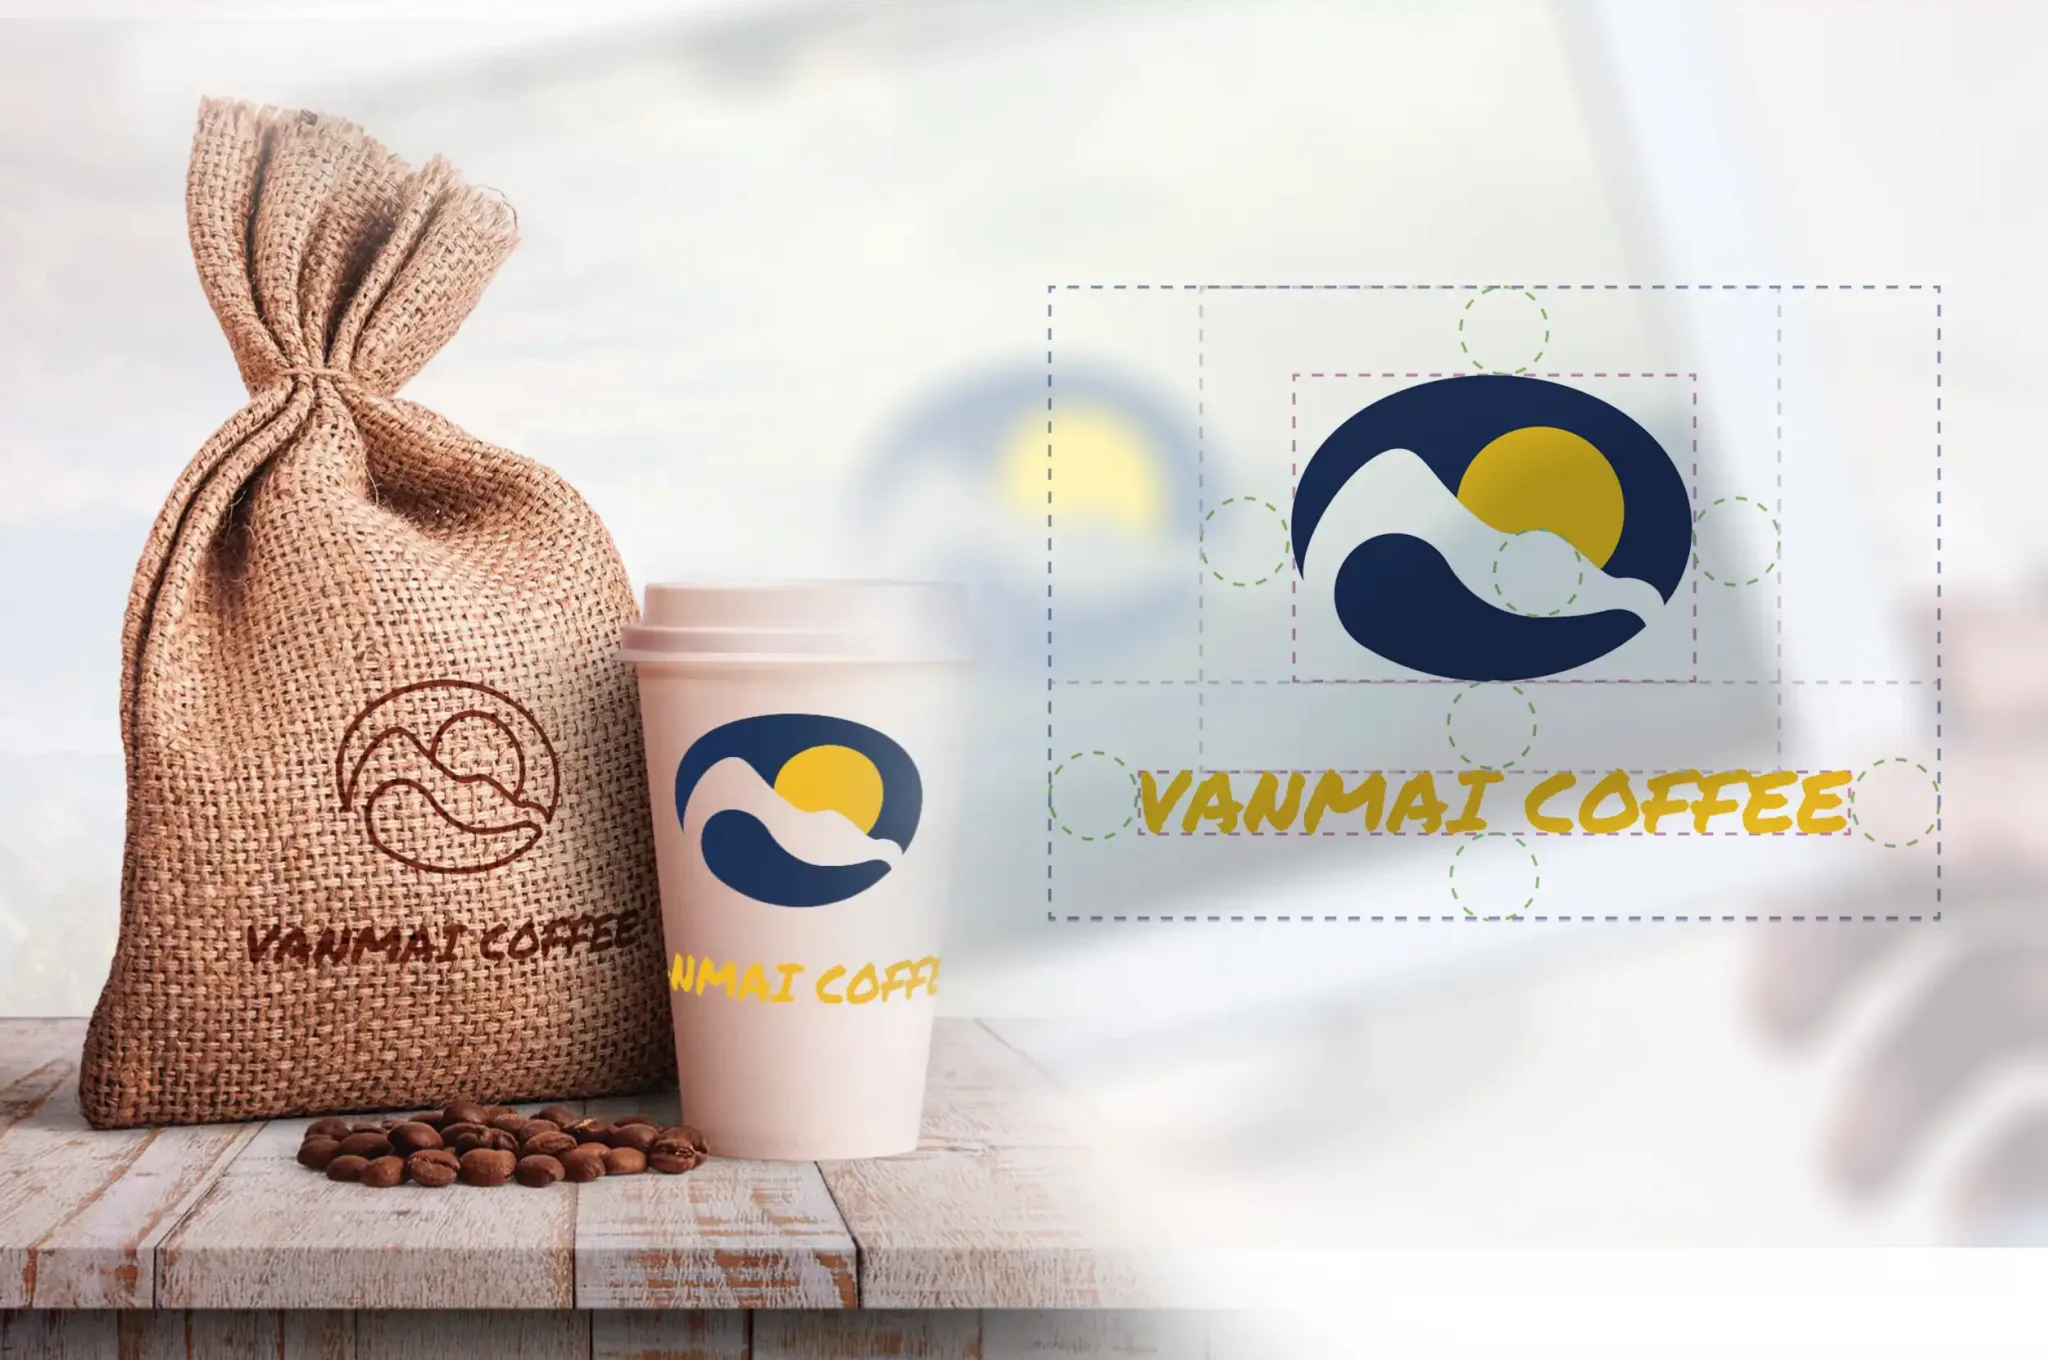 Vanmai Coffe: helping people to grow coffee in rural areas of Laos